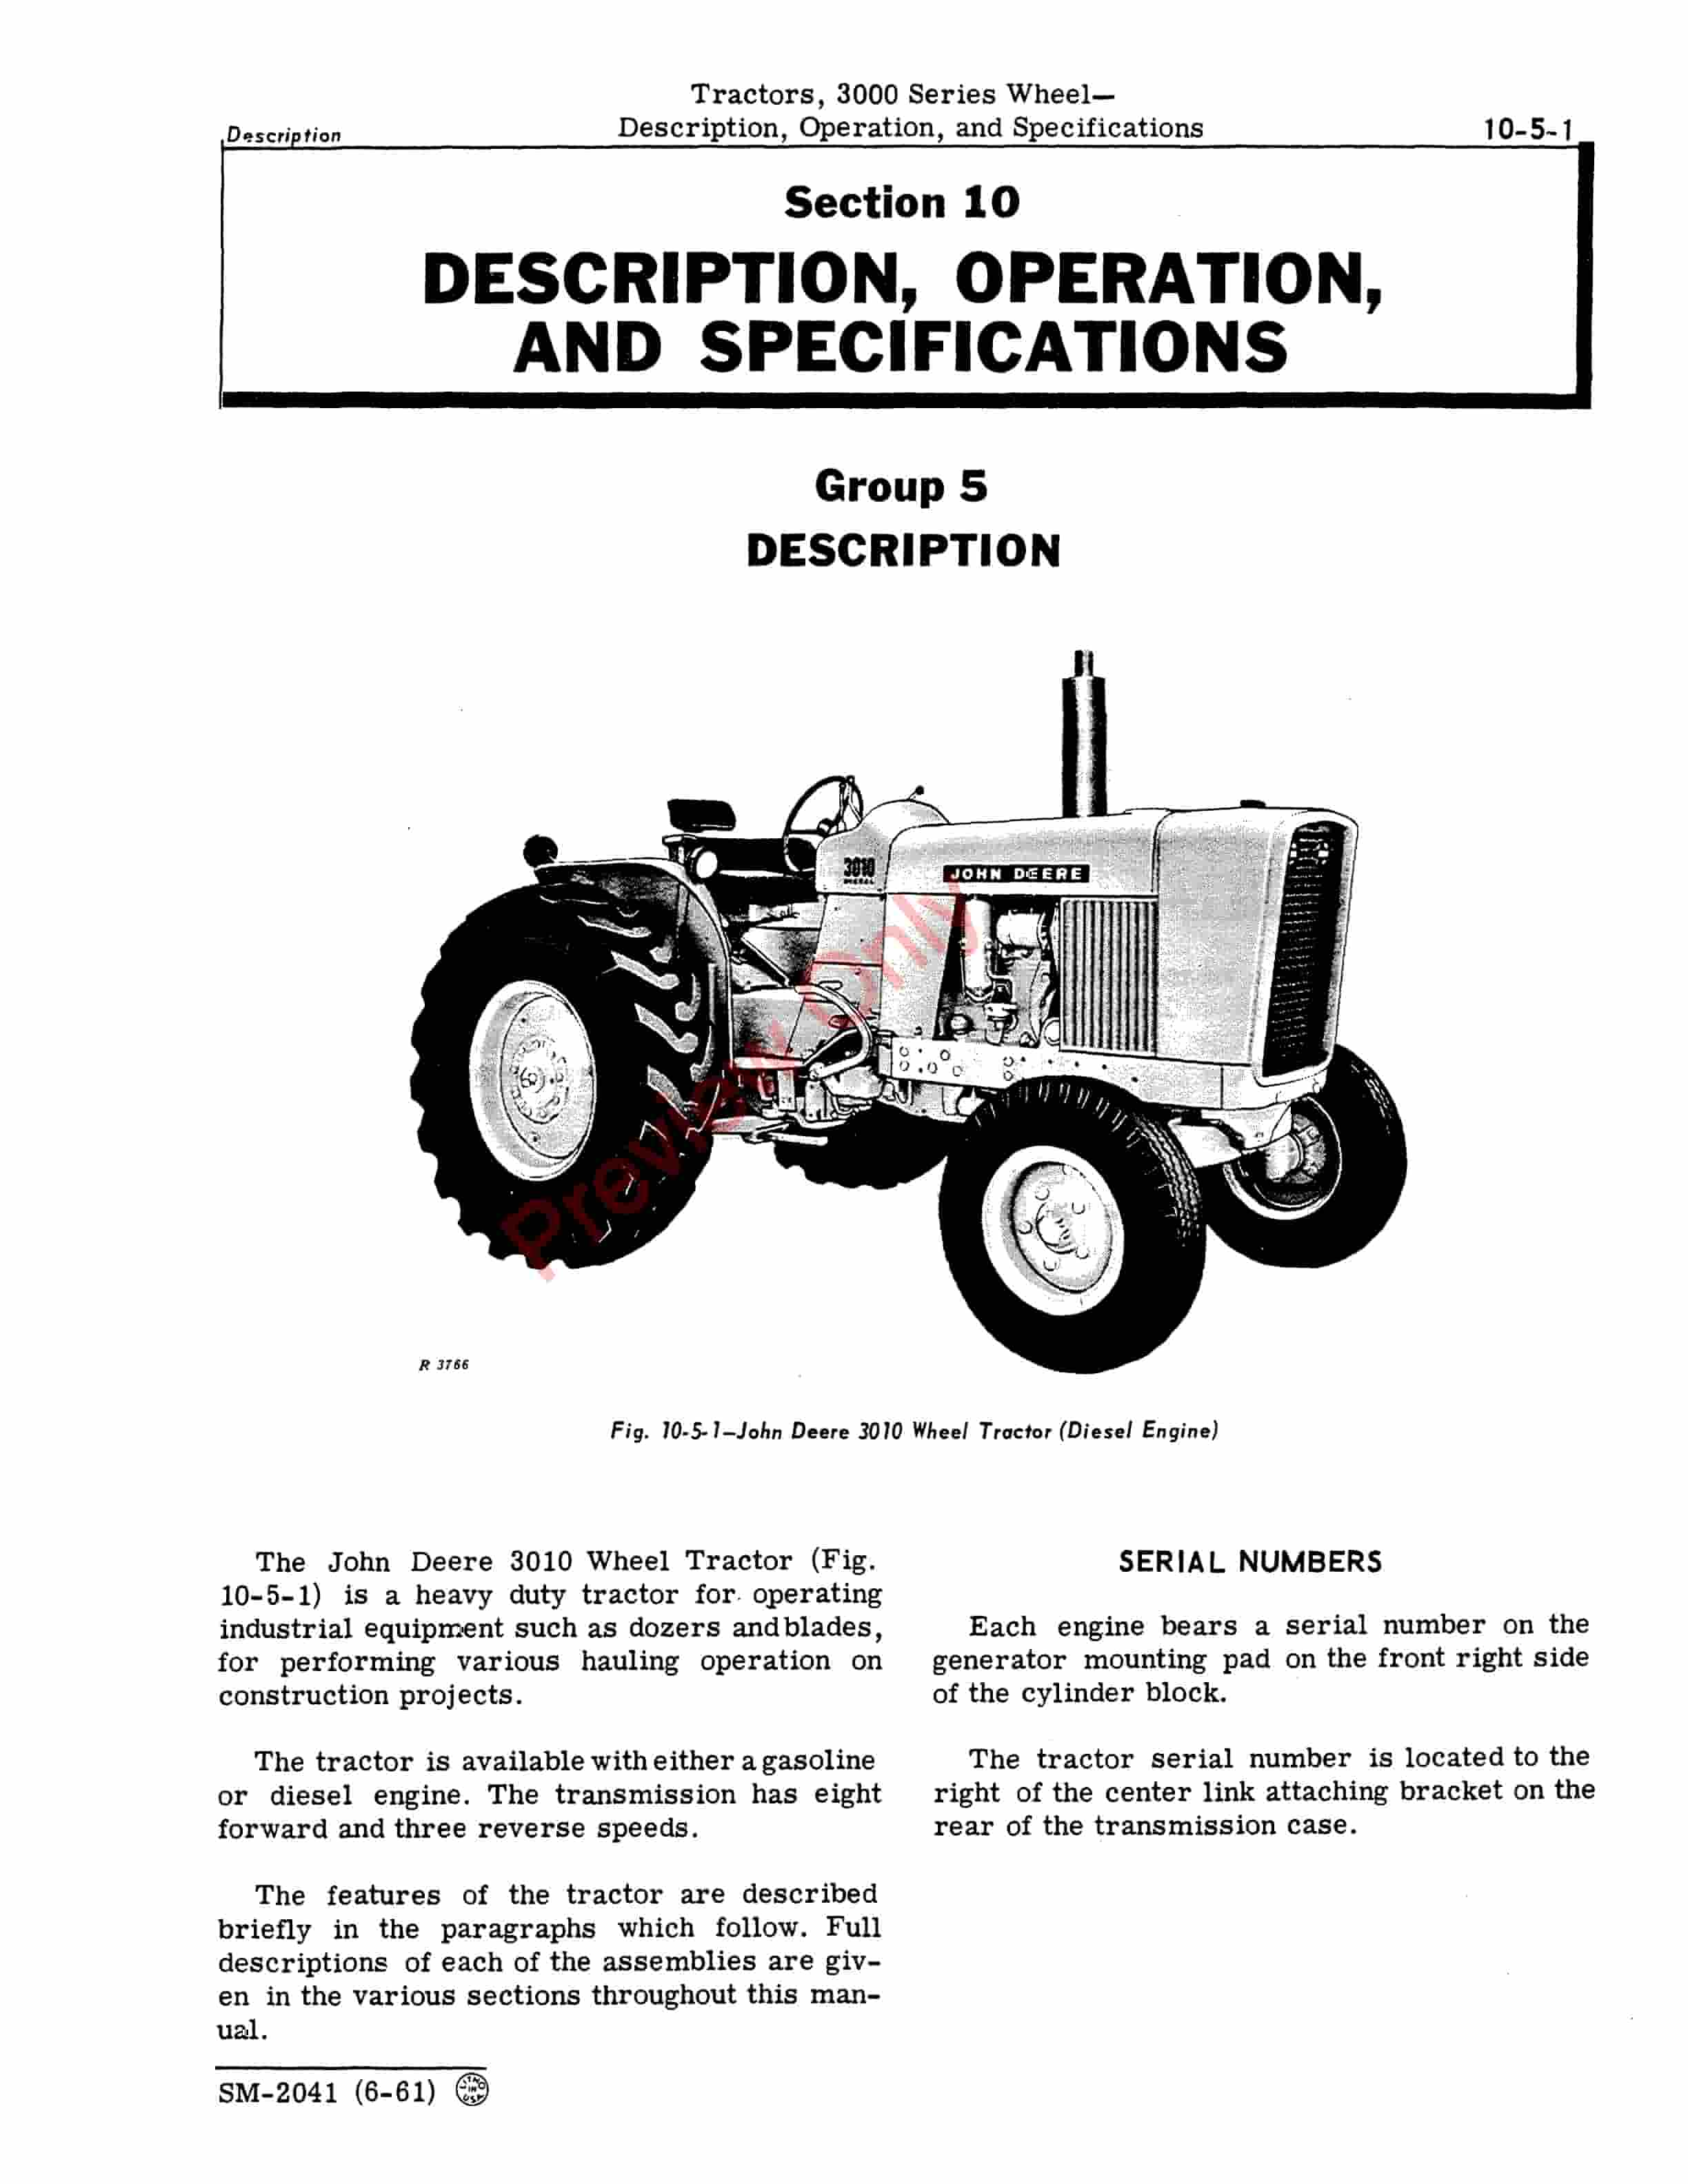 John Deere 3010 Wheel Tractor Service Manual SM2041 01JUN61 5